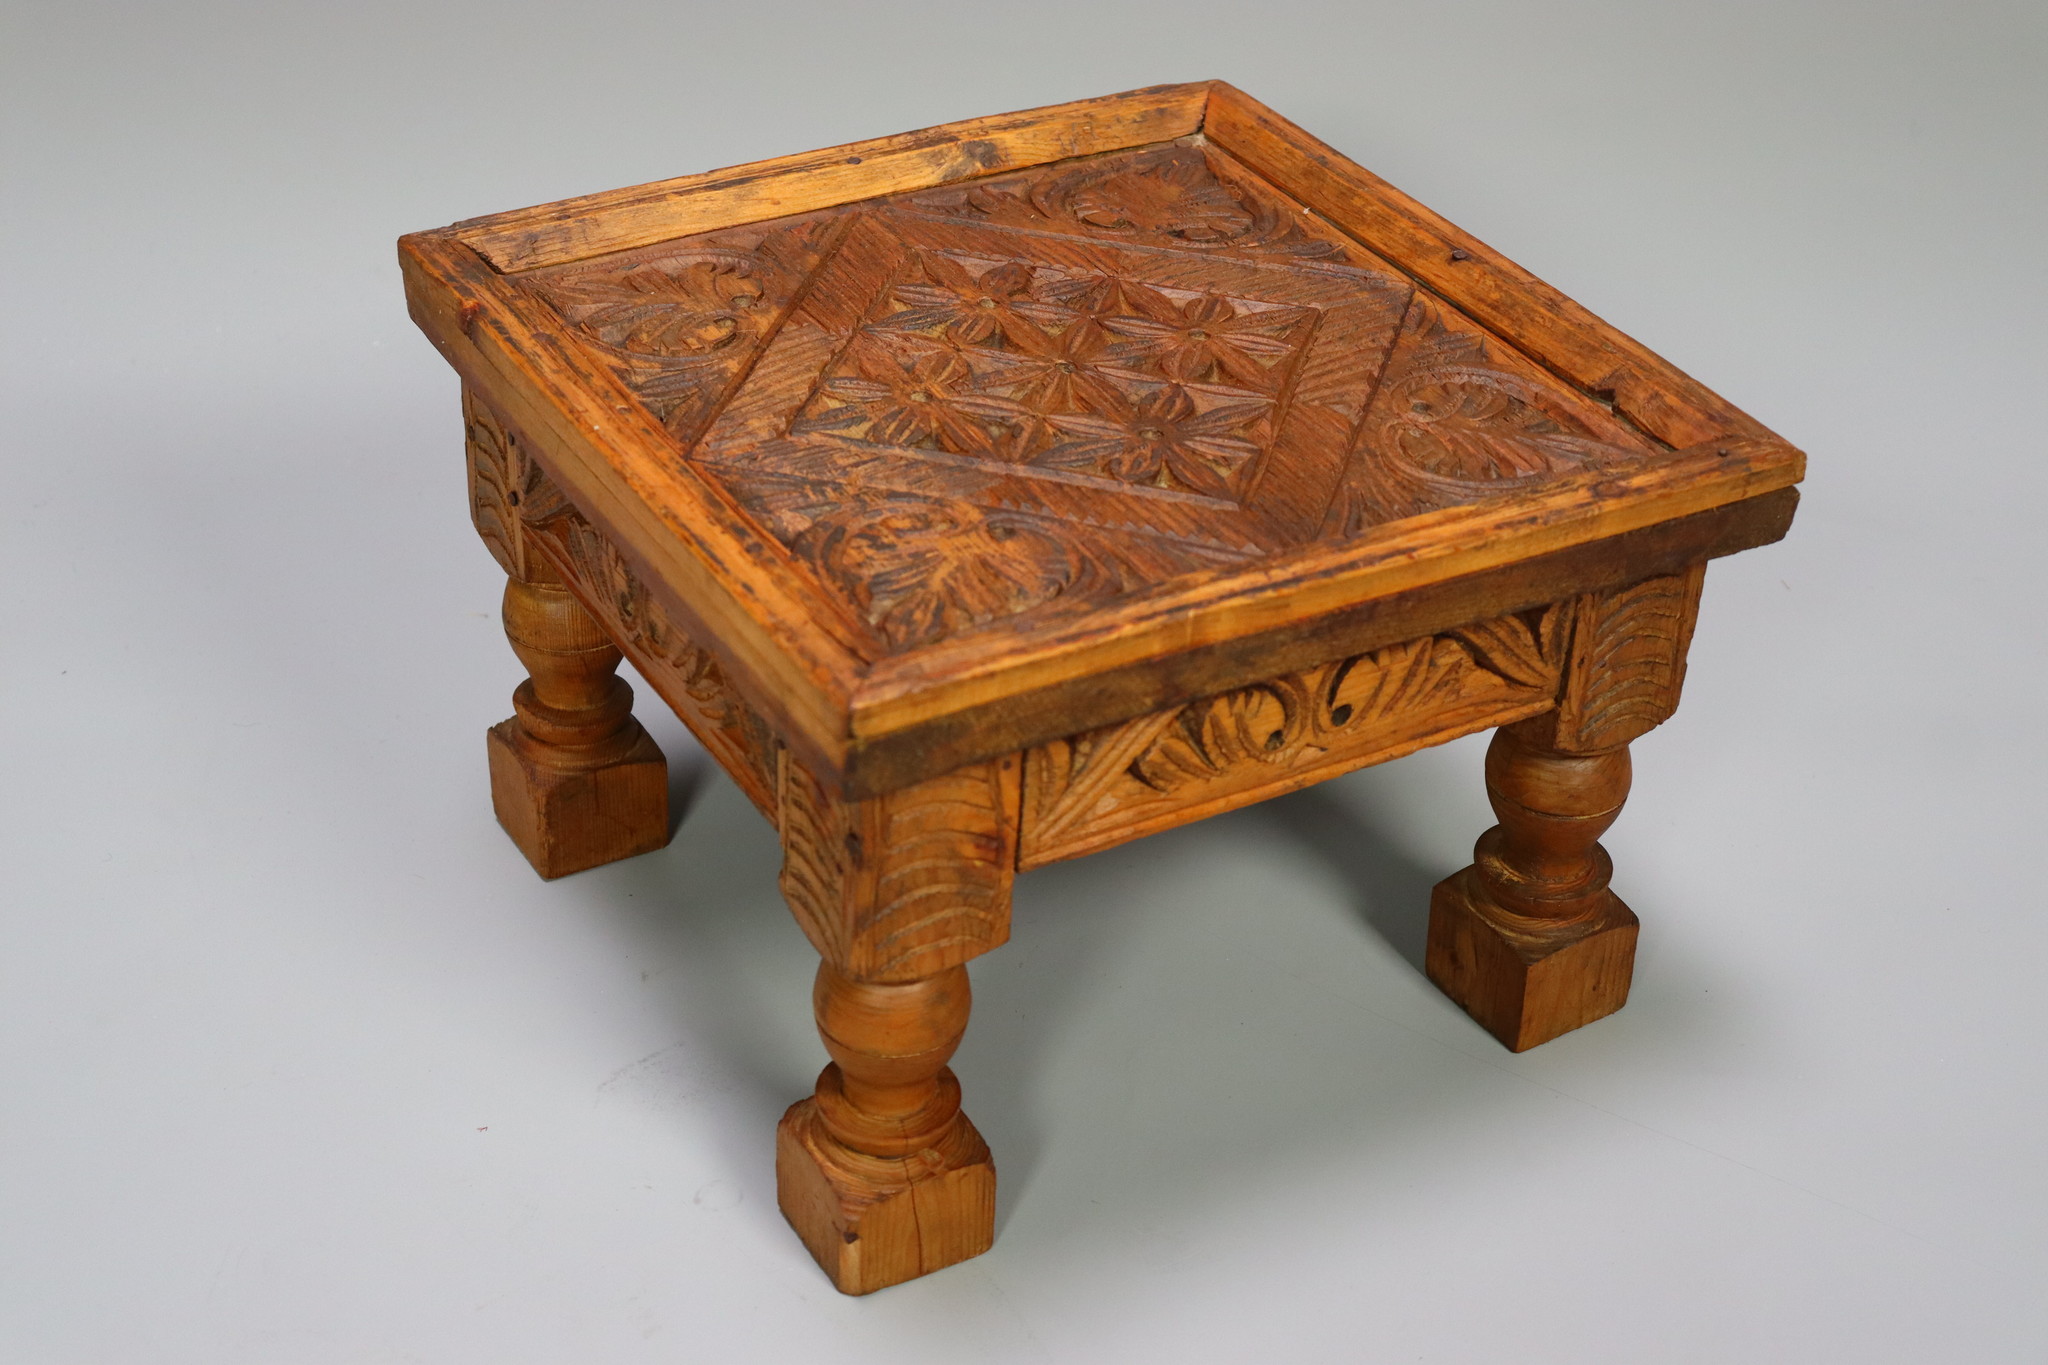 30x30 cm Antique  wooden Unique table  from Afghanistan Nuristan 22G